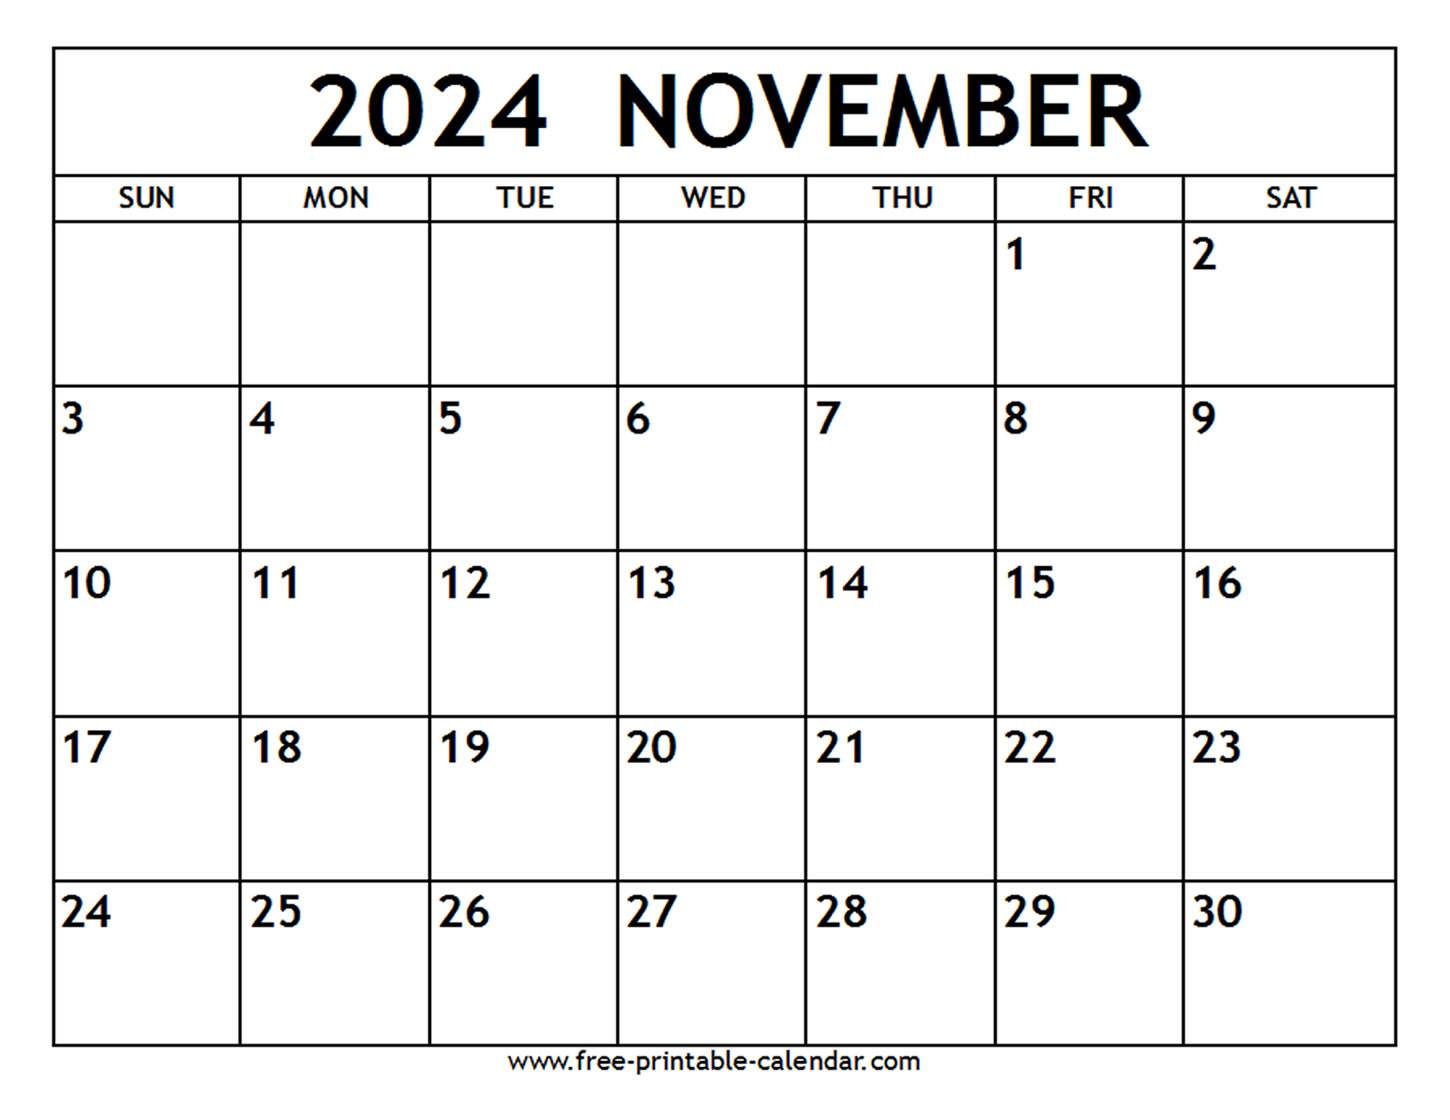 November 2024 Calendar Free Printable alis kelley